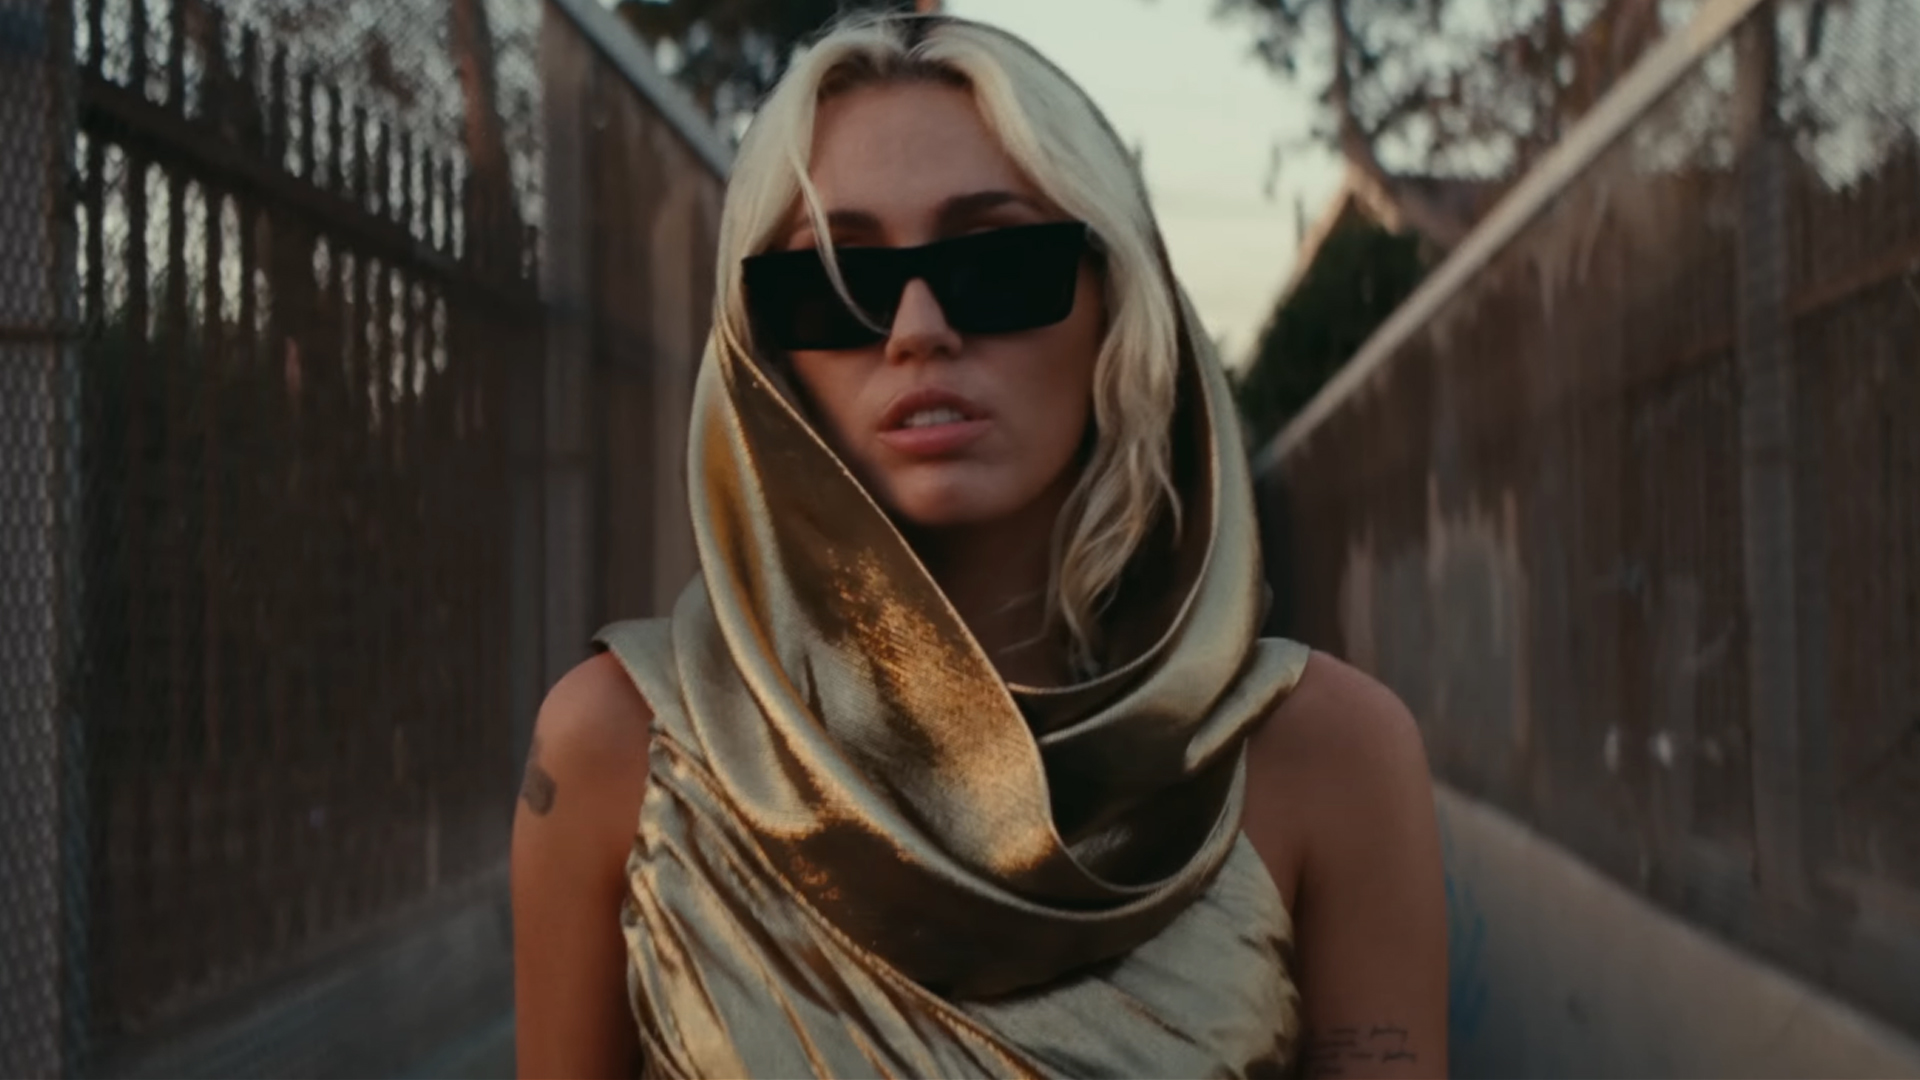 Miley Cyrus 'Endless Summer' Tracklist Reveal: Sia, Brandi Carlile